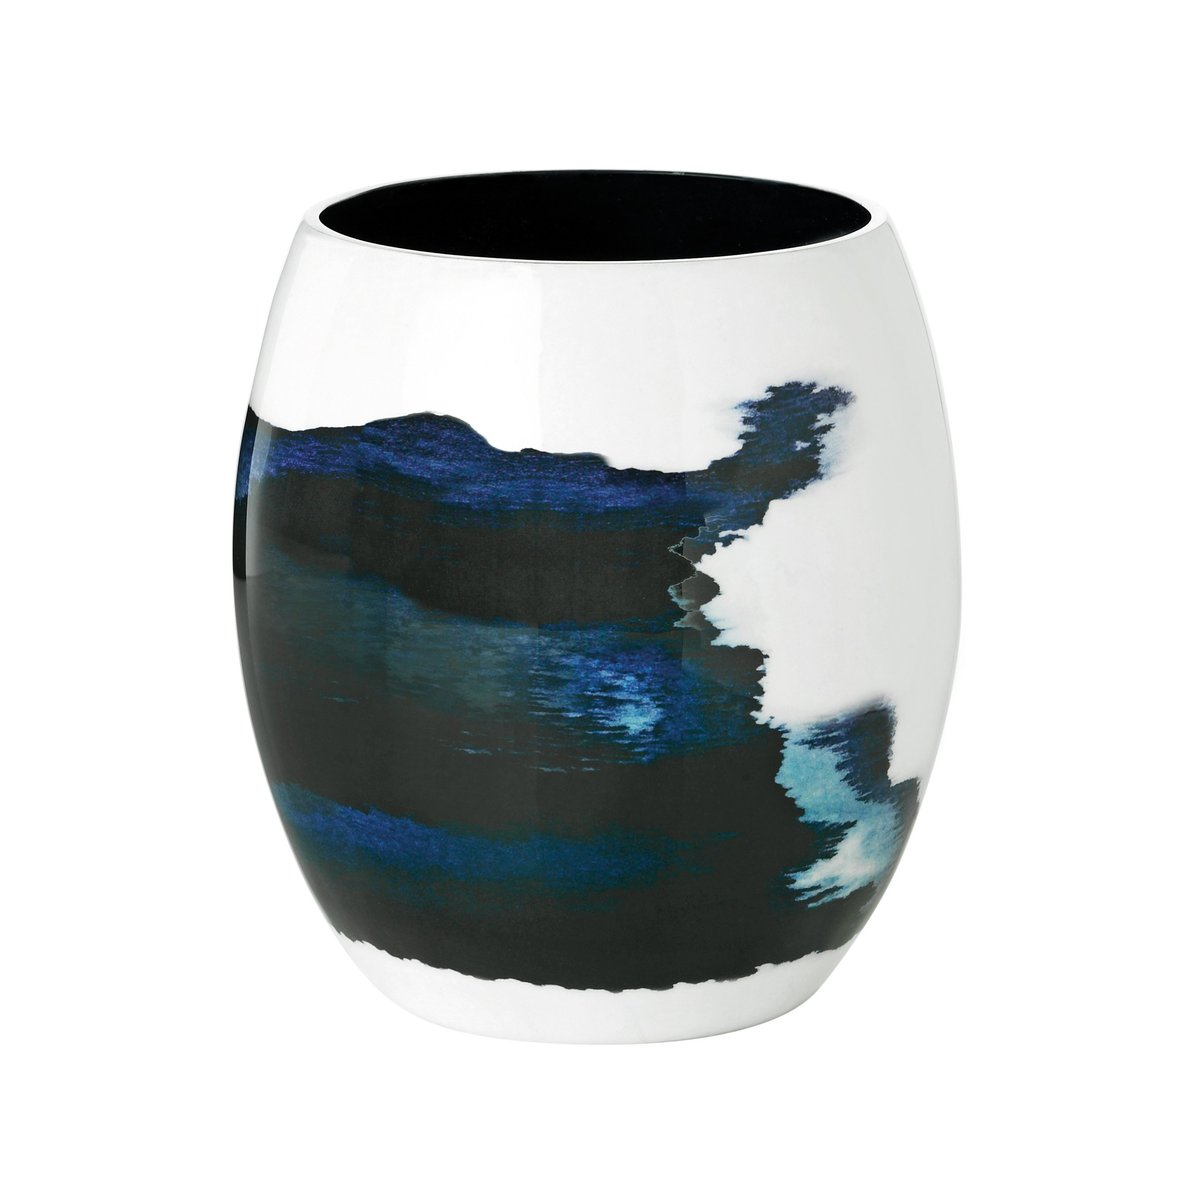 Stelton Stelton – Stockholm Aquatic vase Ø 13,1 cm